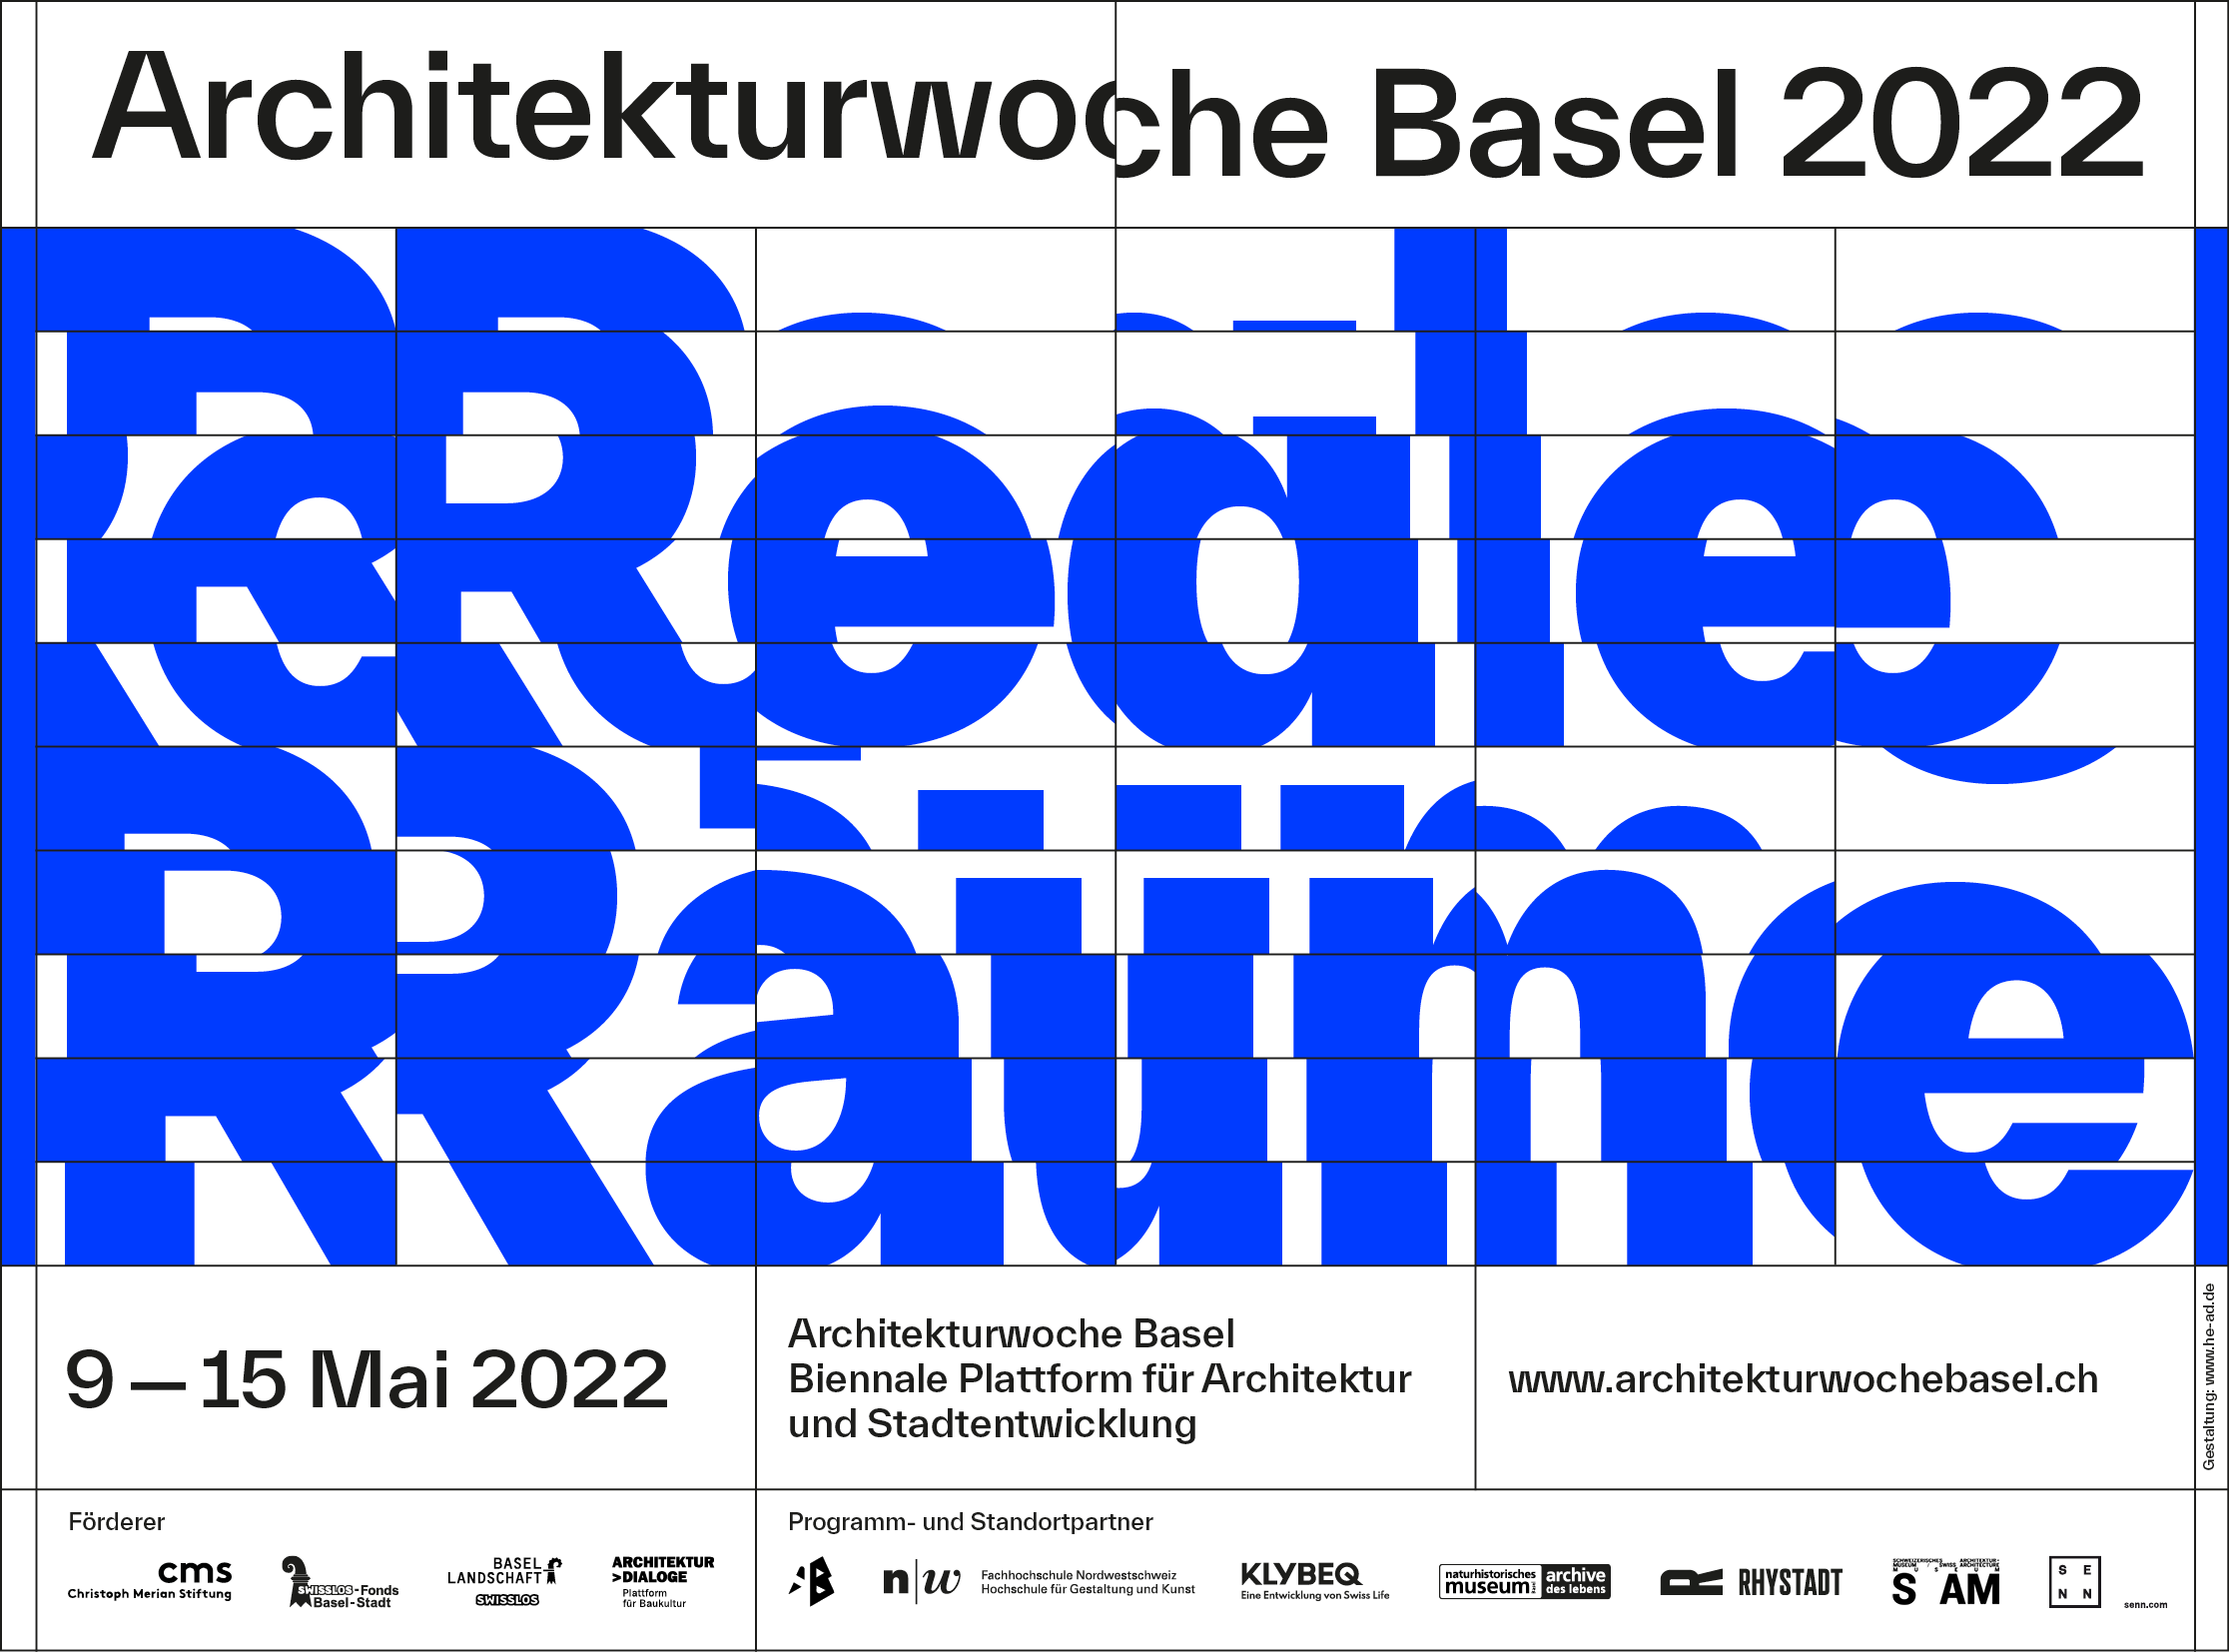 ARCHITEKTURWOCHE BASEL 2022